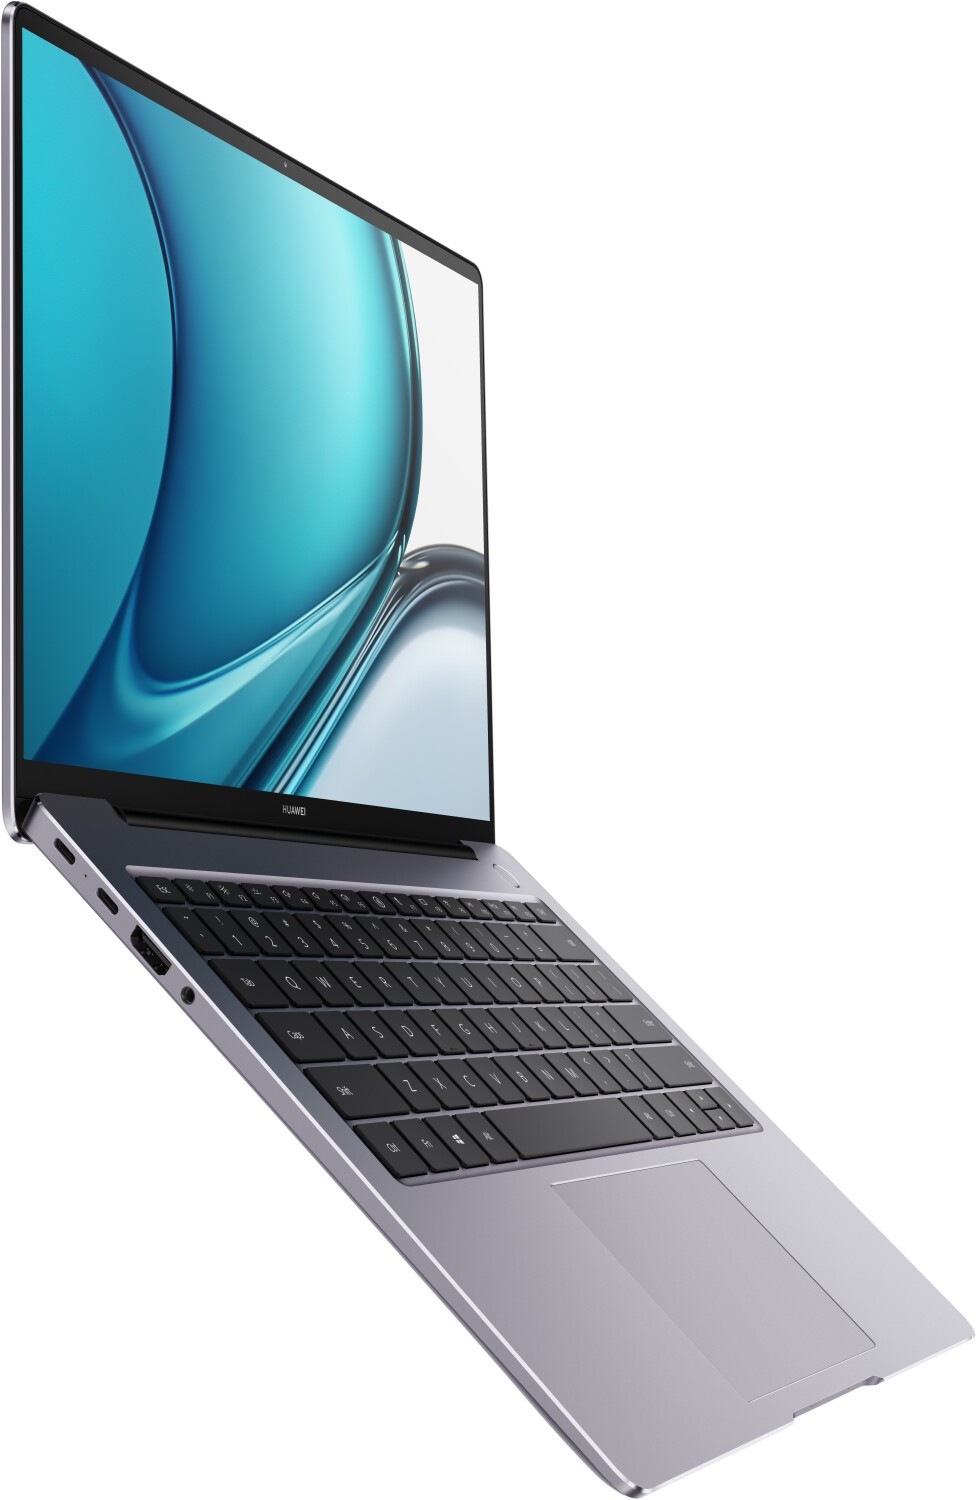 Ультрабук Huawei MateBook D14S HKD-W76 Gray (53012MAC)